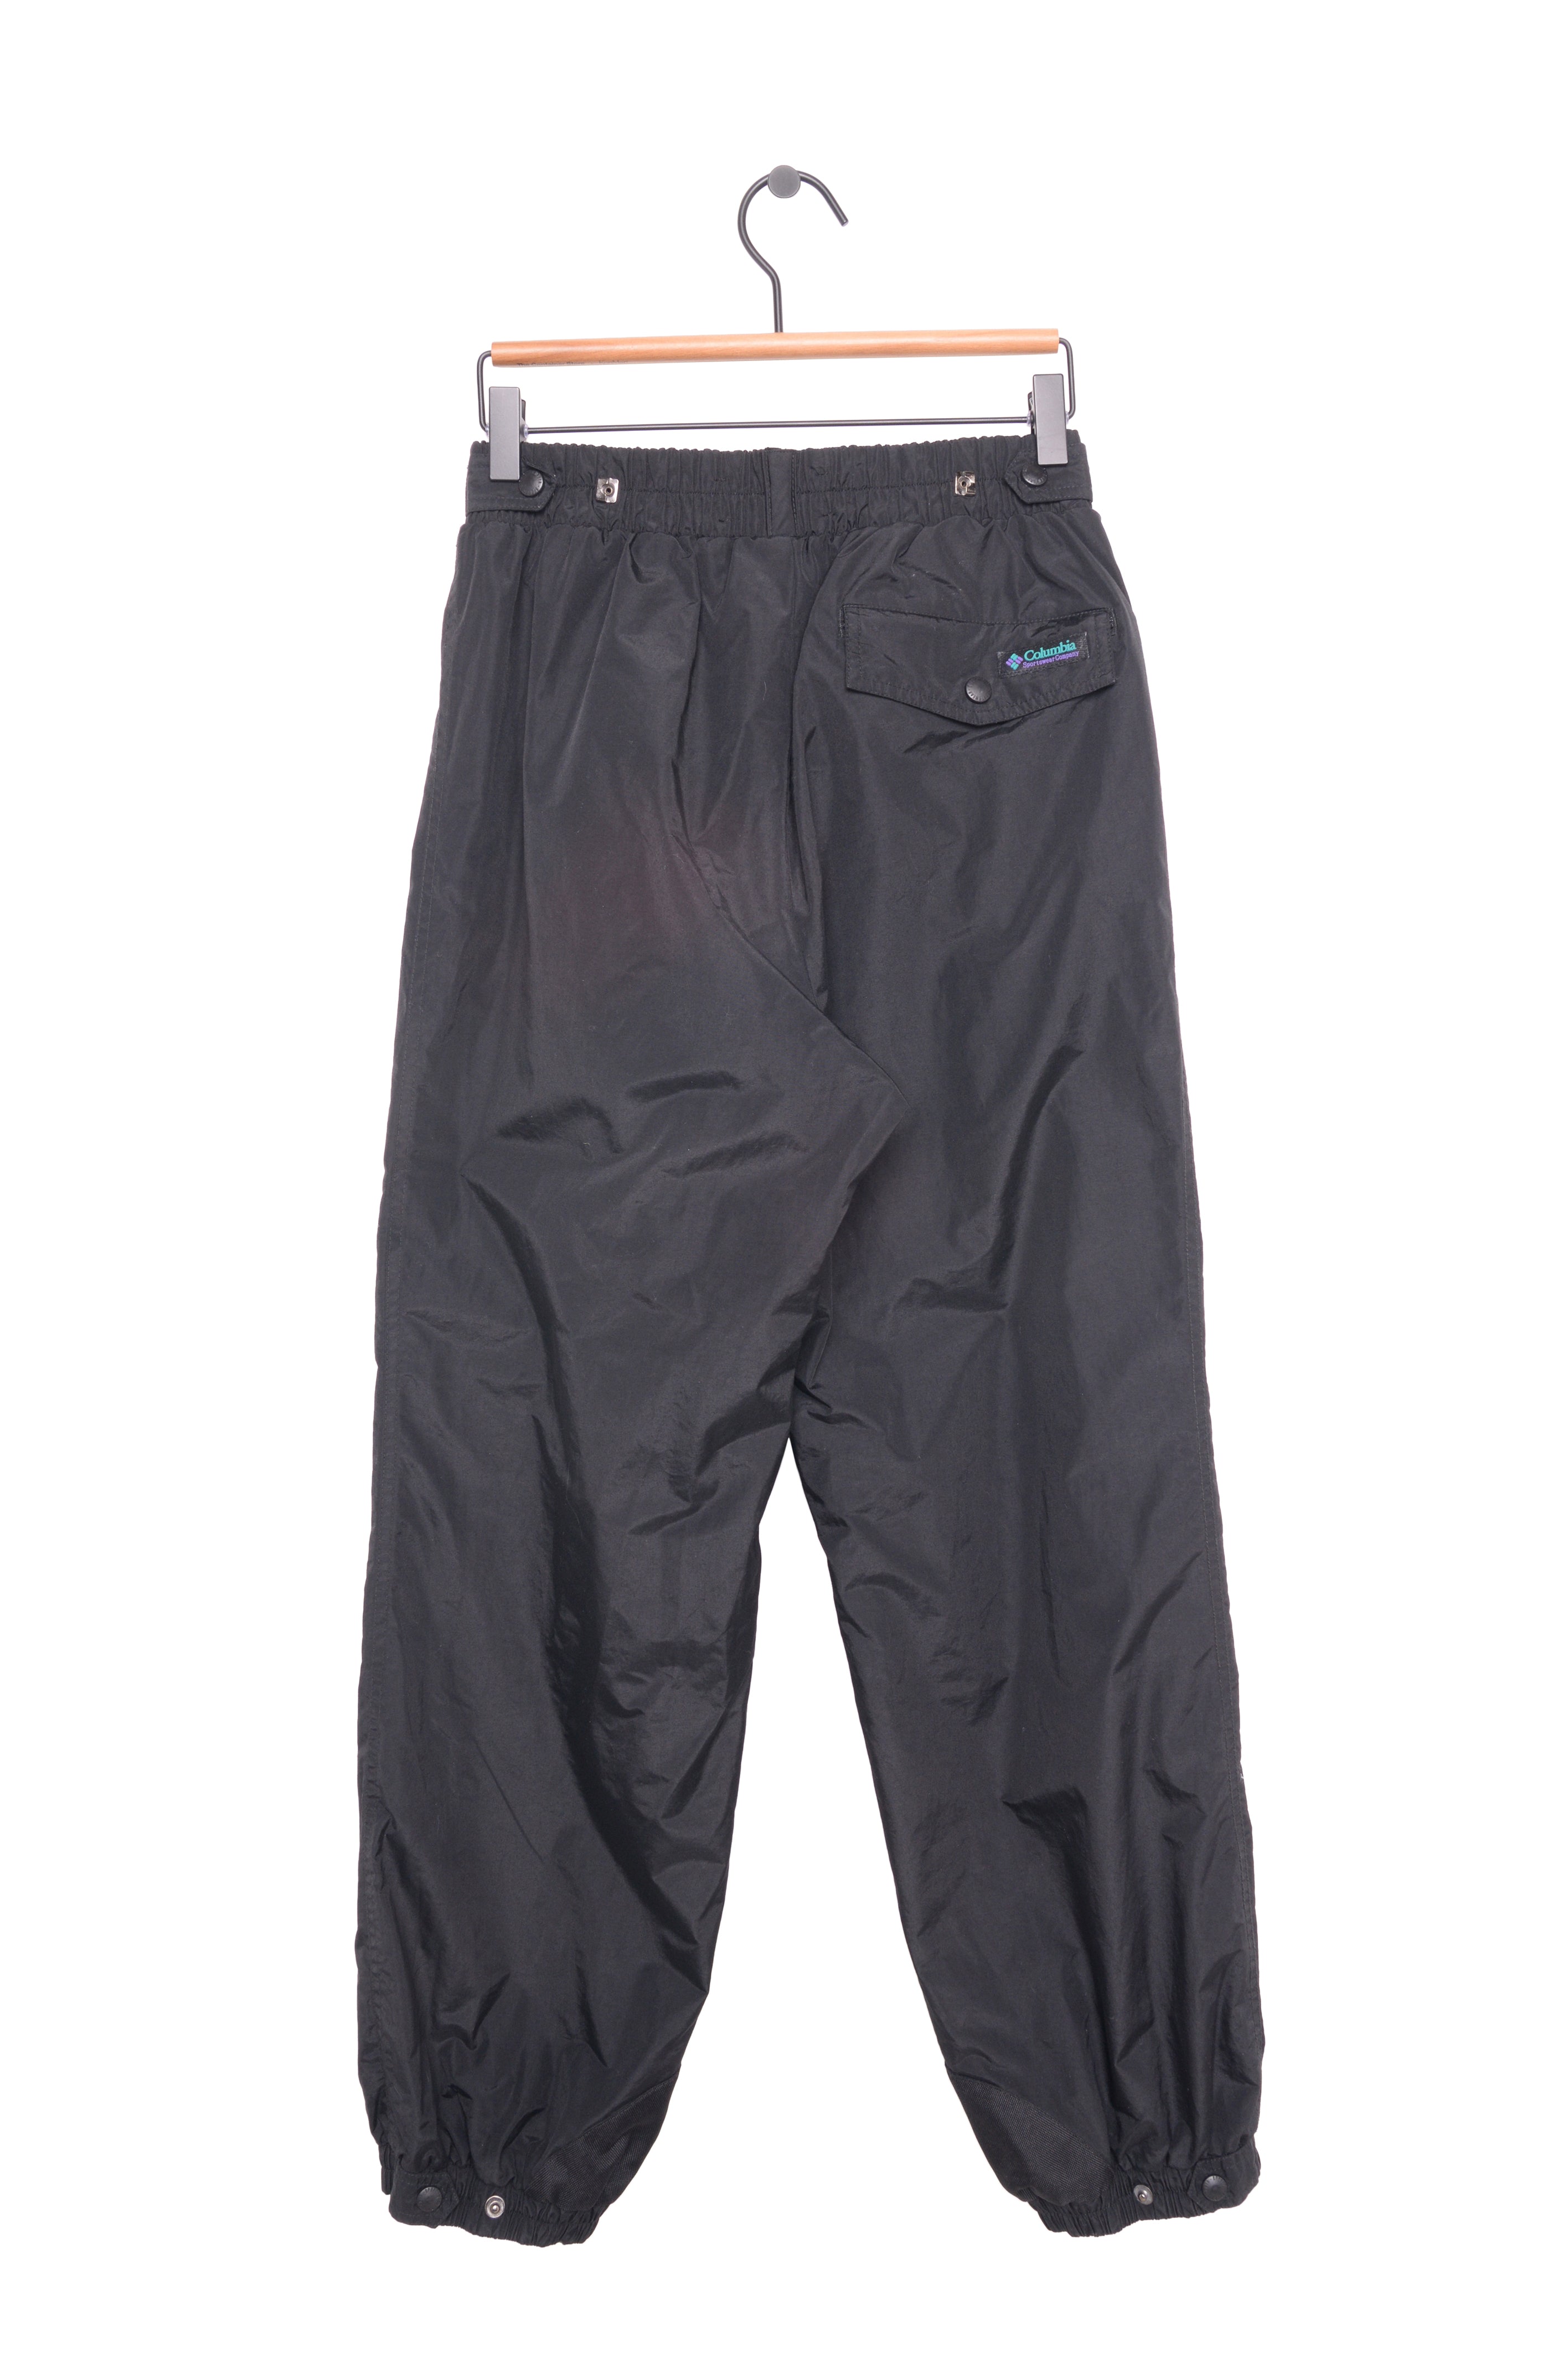 Columbia Black Omni-Tech Athletic Windbreaker Track Pants Adult Size 2XL |  eBay